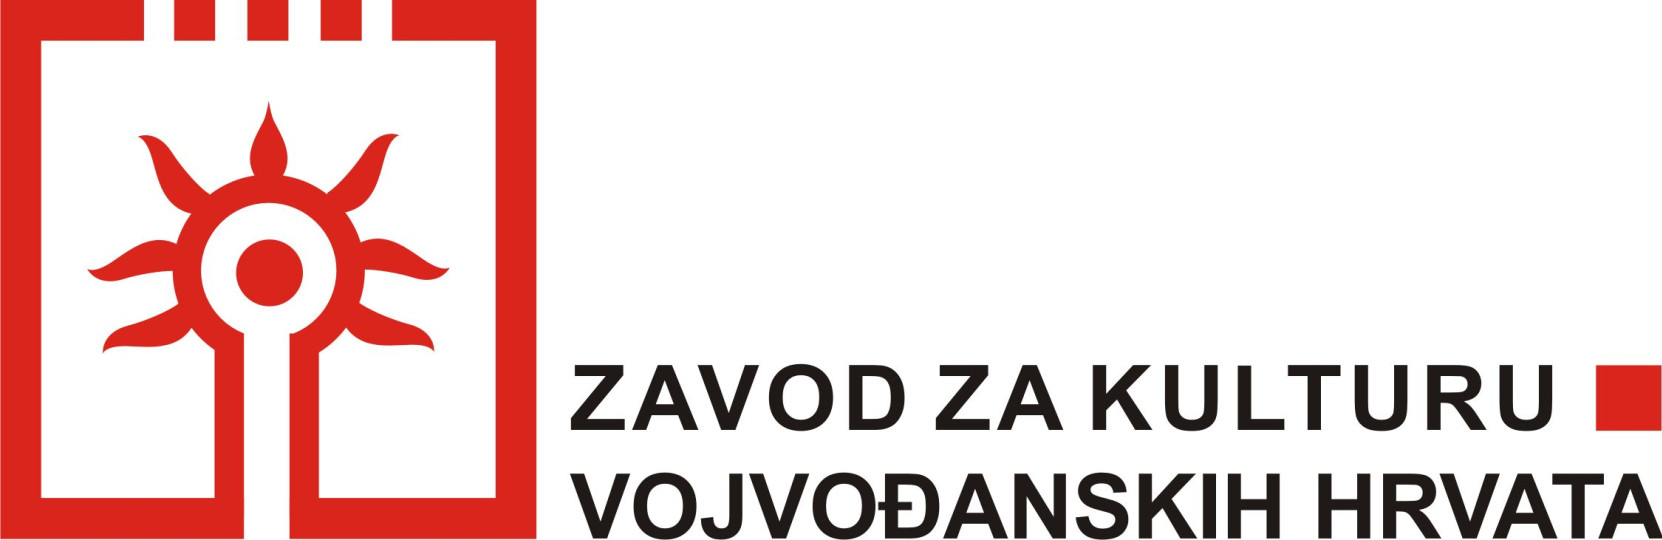 29. ožujka – Dan Zavoda za kulturu vojvođanskih Hrvata